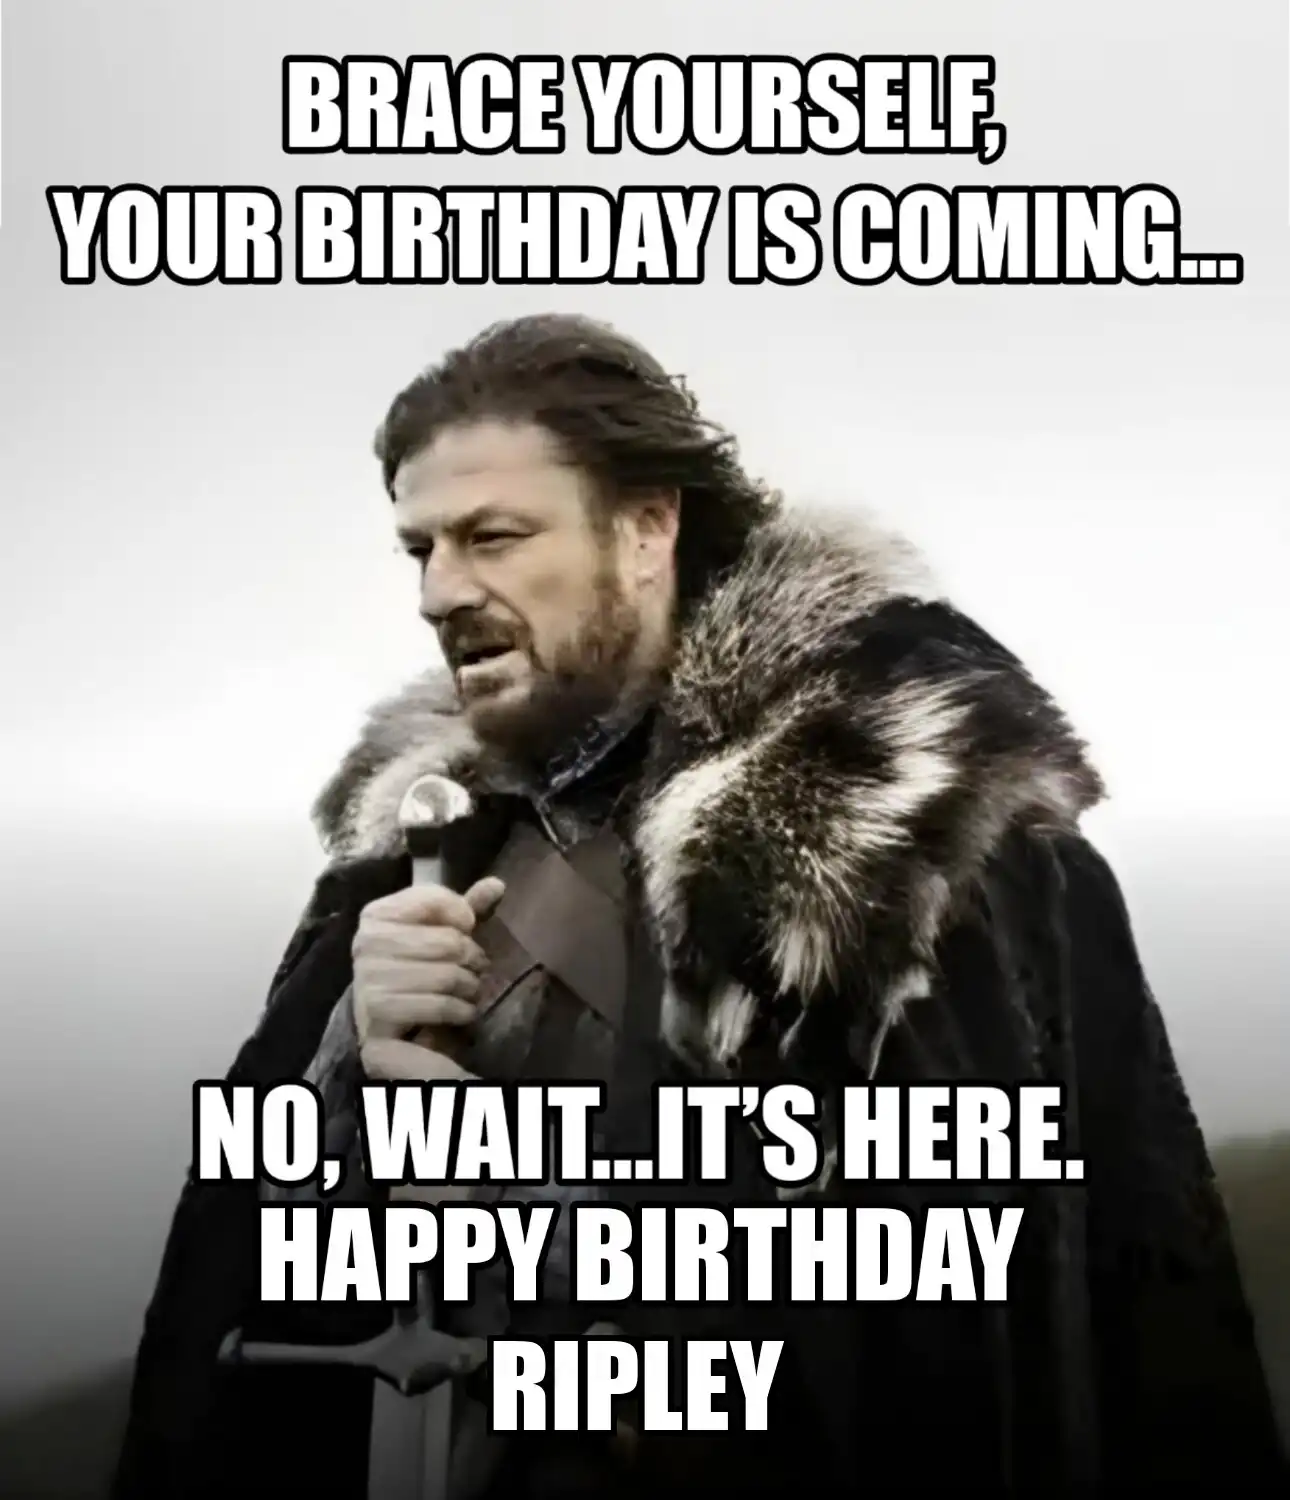 Happy Birthday Ripley Brace Yourself Your Birthday Is Coming Meme